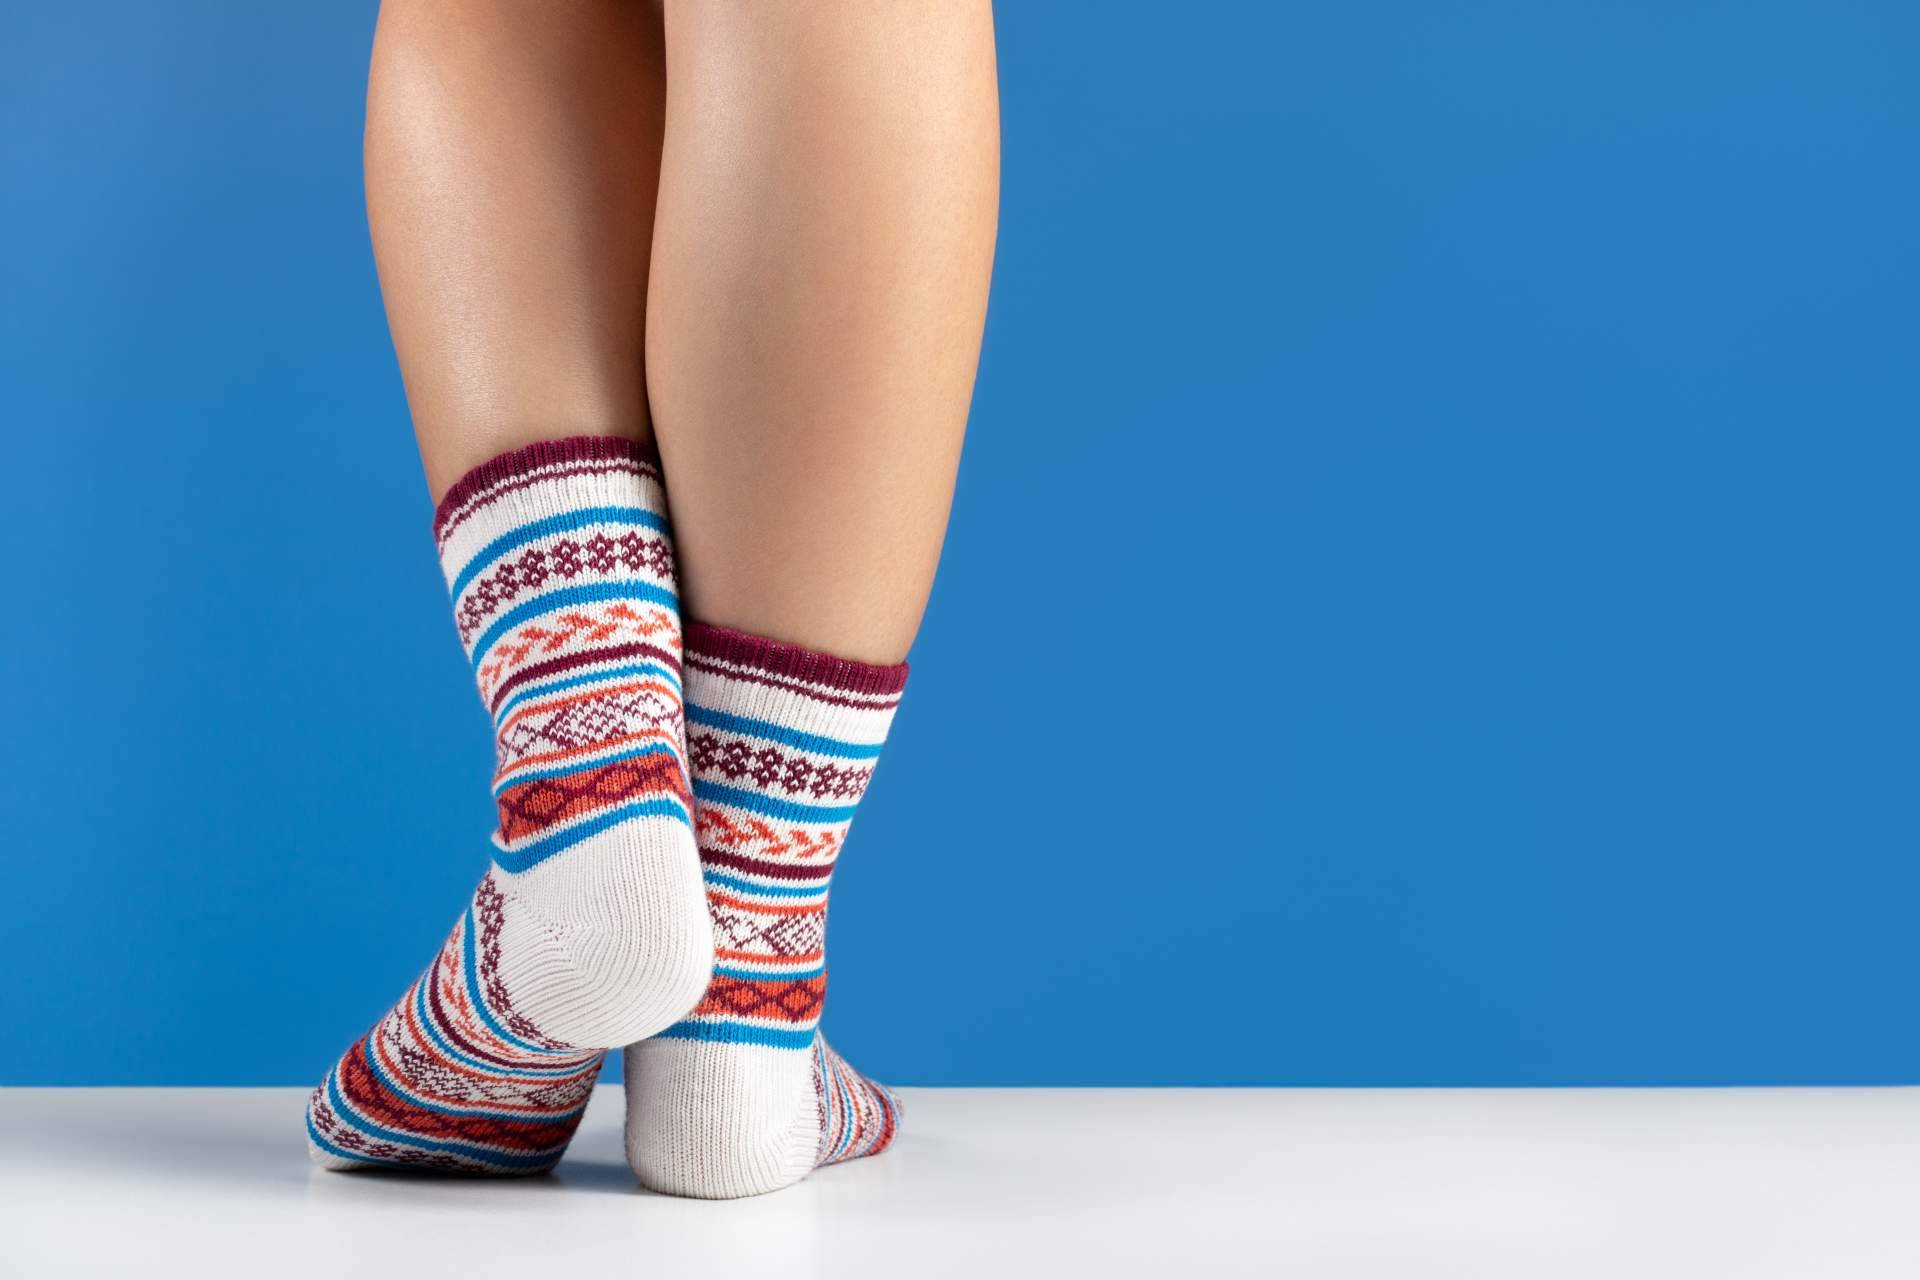 El outlet de calcetines divertidos de Socks Market